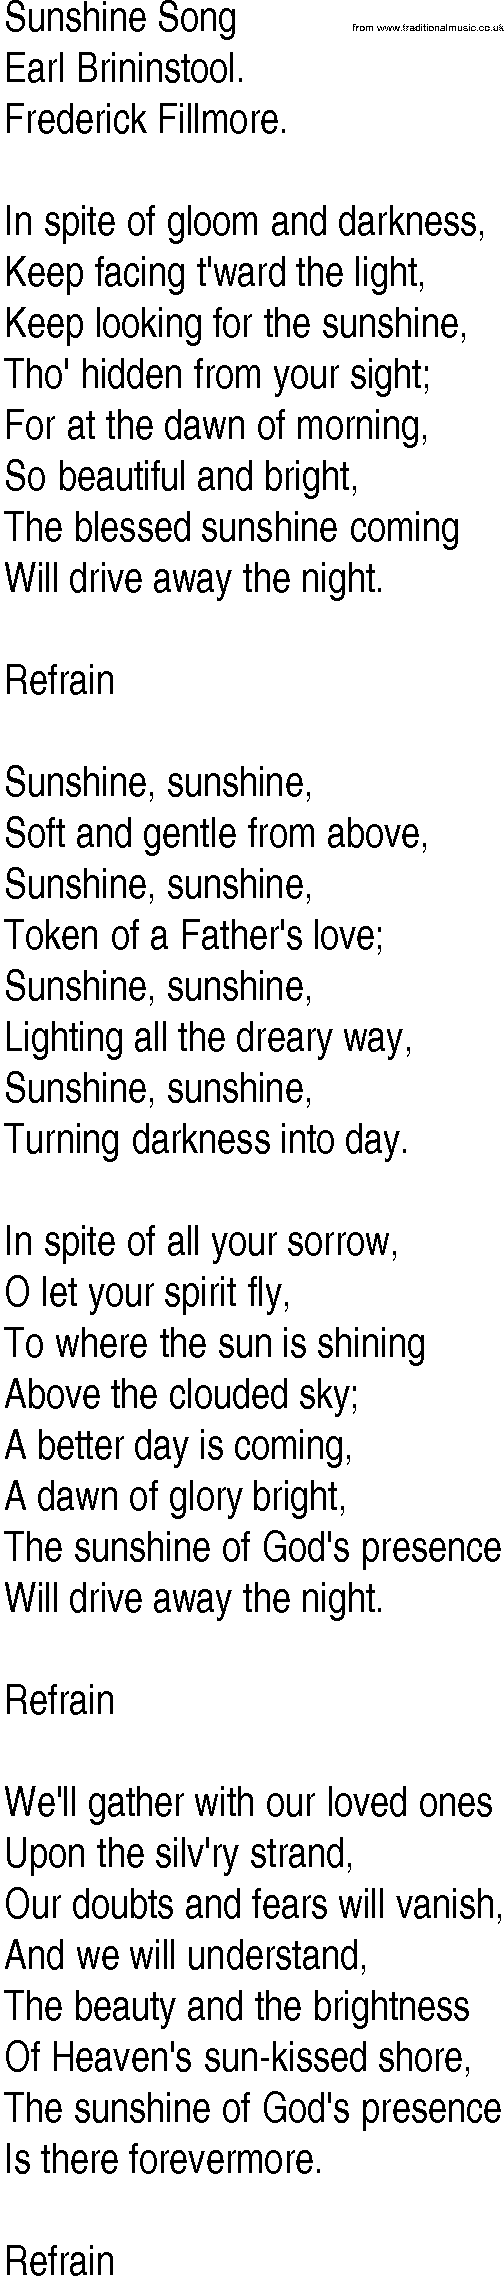 Hymn and Gospel Song: Sunshine Song by Earl Brininstool lyrics